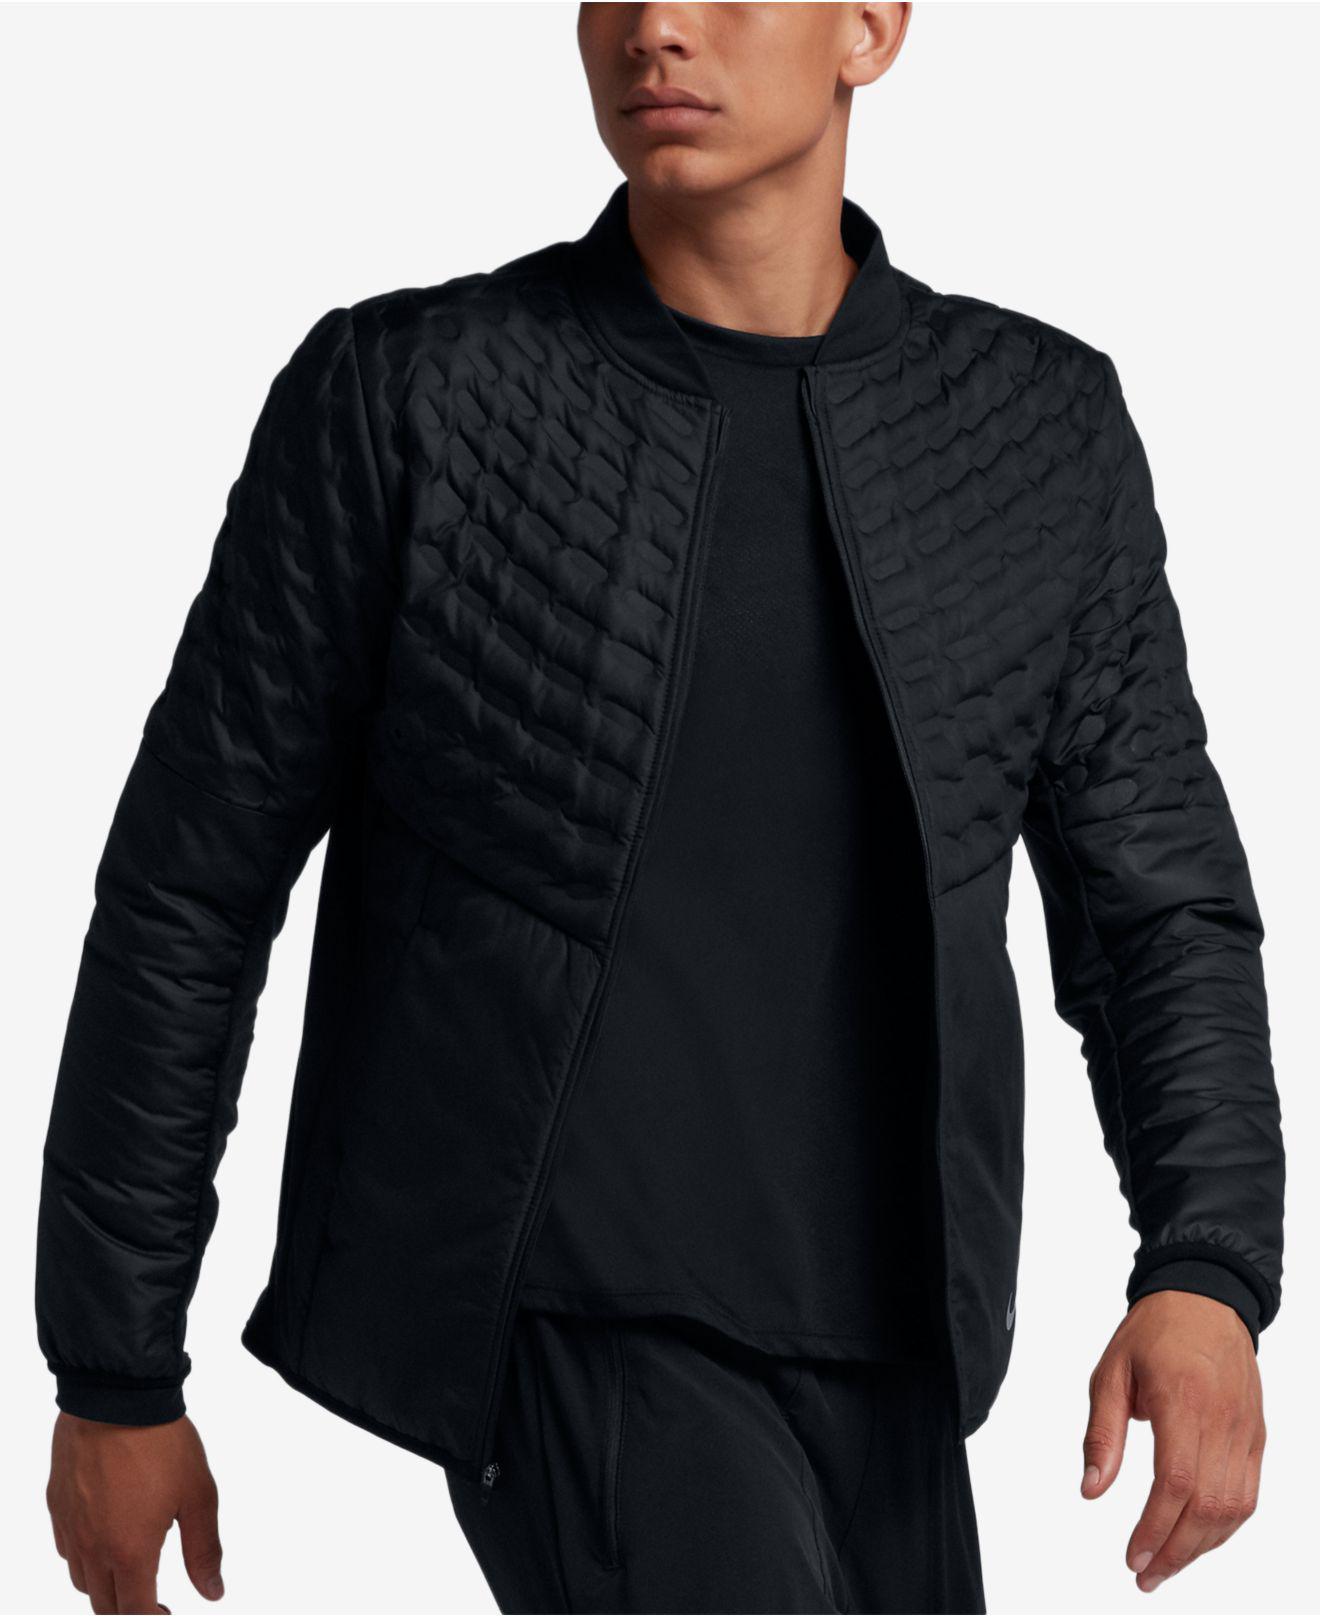 Nike Aeroloft Running Jacket in Black 